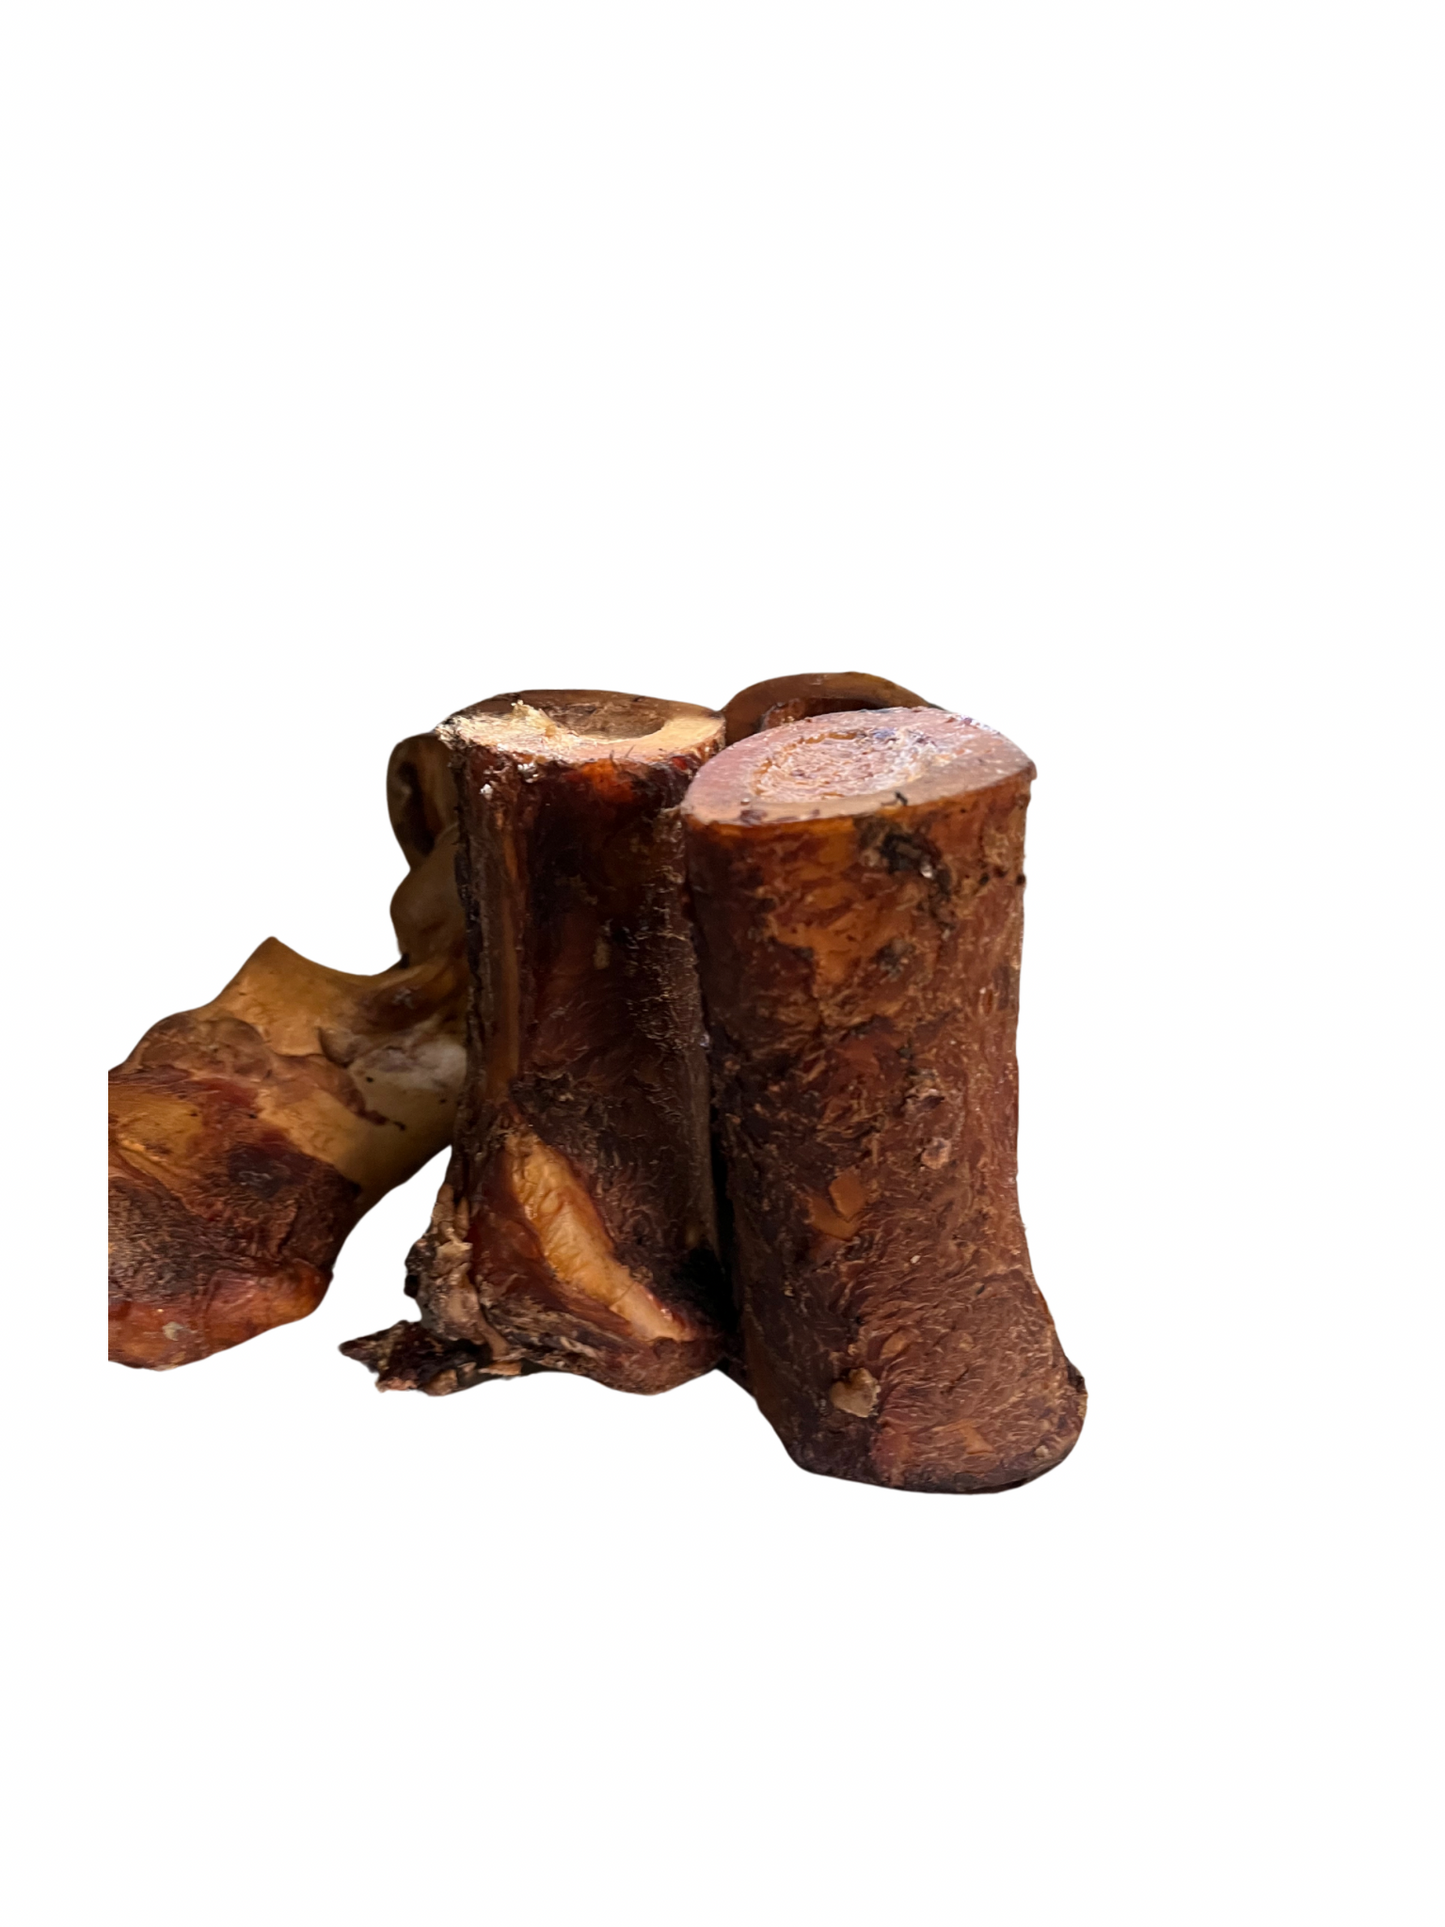 Smoked Beef Marrow Bone - Large dog bone